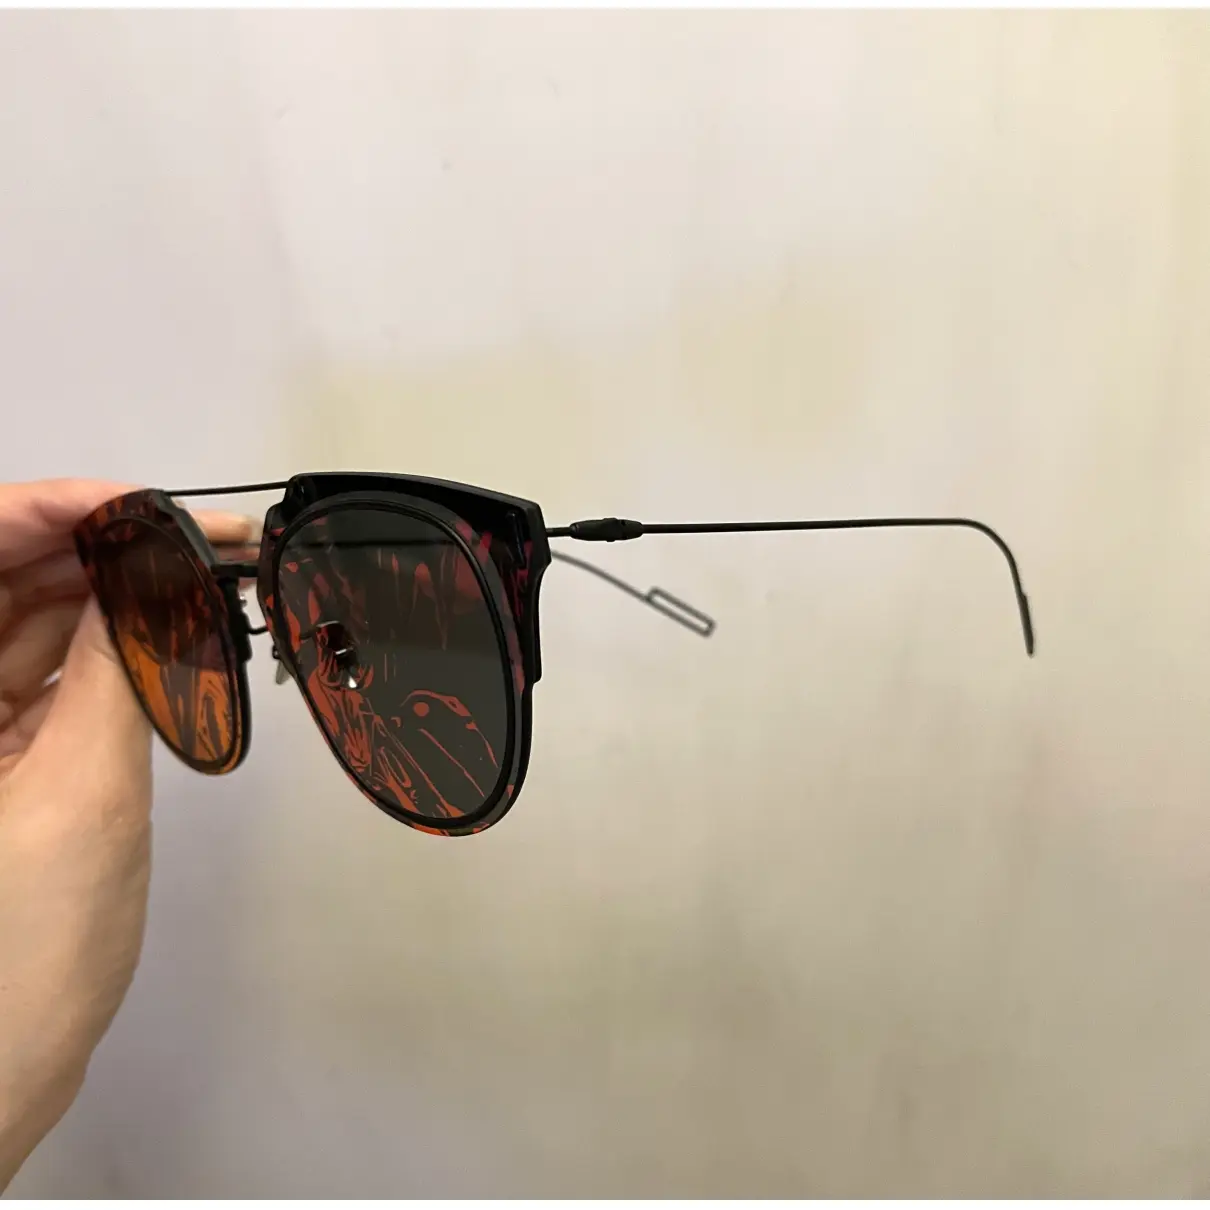 Buy Dior Homme Dior Composit 1.0 sunglasses online